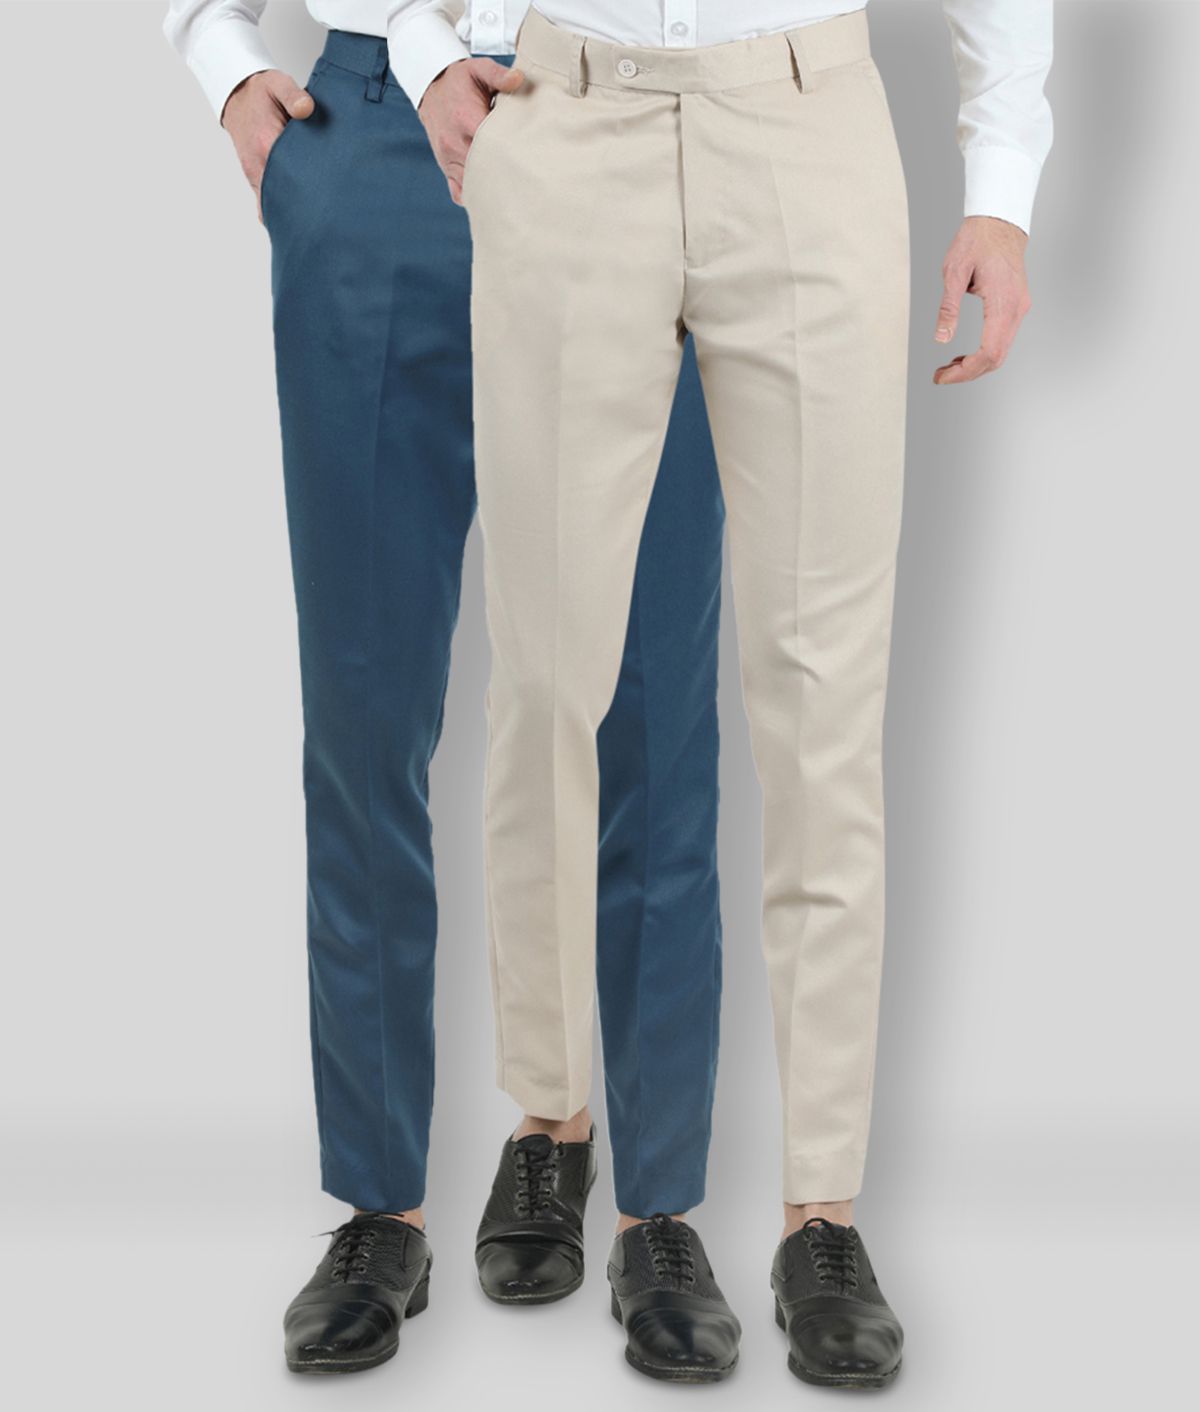 VEI SASTRE - Multicolored Polycotton Slim - Fit Men's Formal Pants ( Pack of 2 )